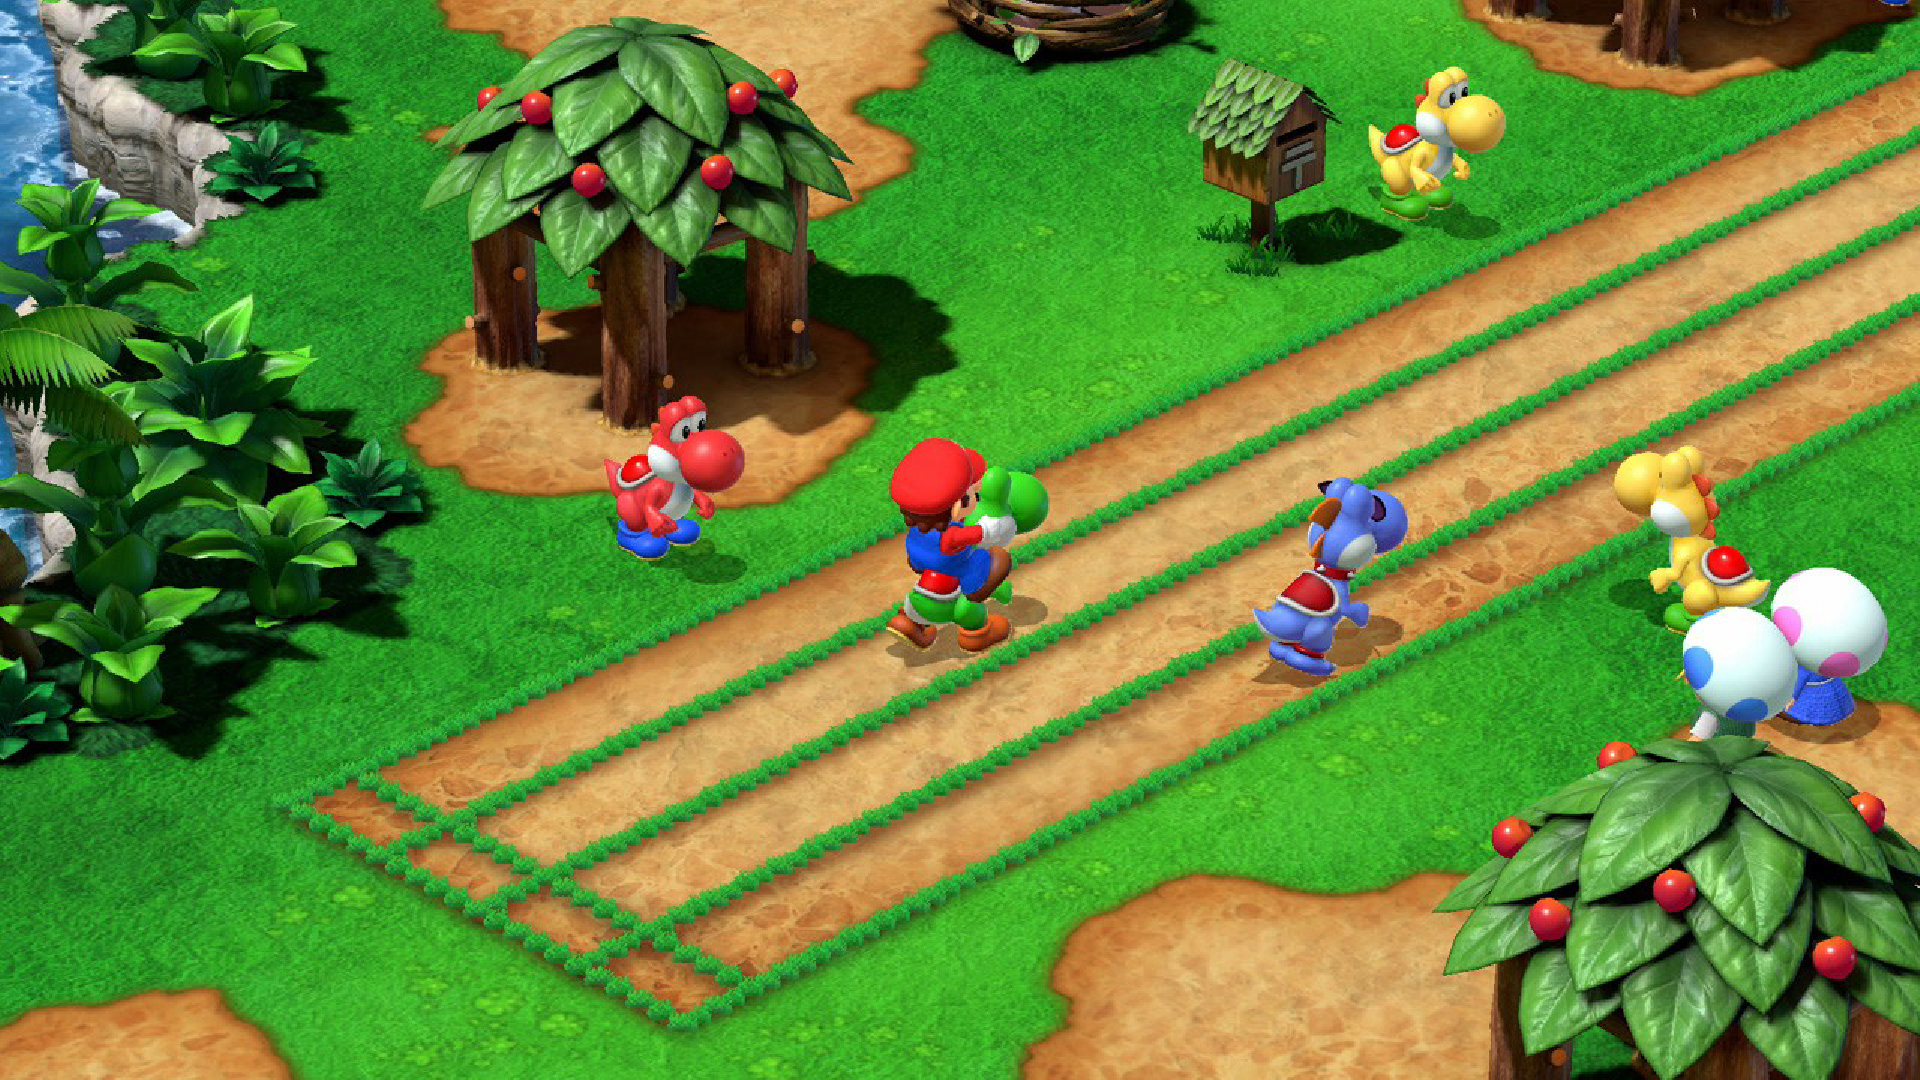 Mario riding yoshi in Super Mario RPG remake